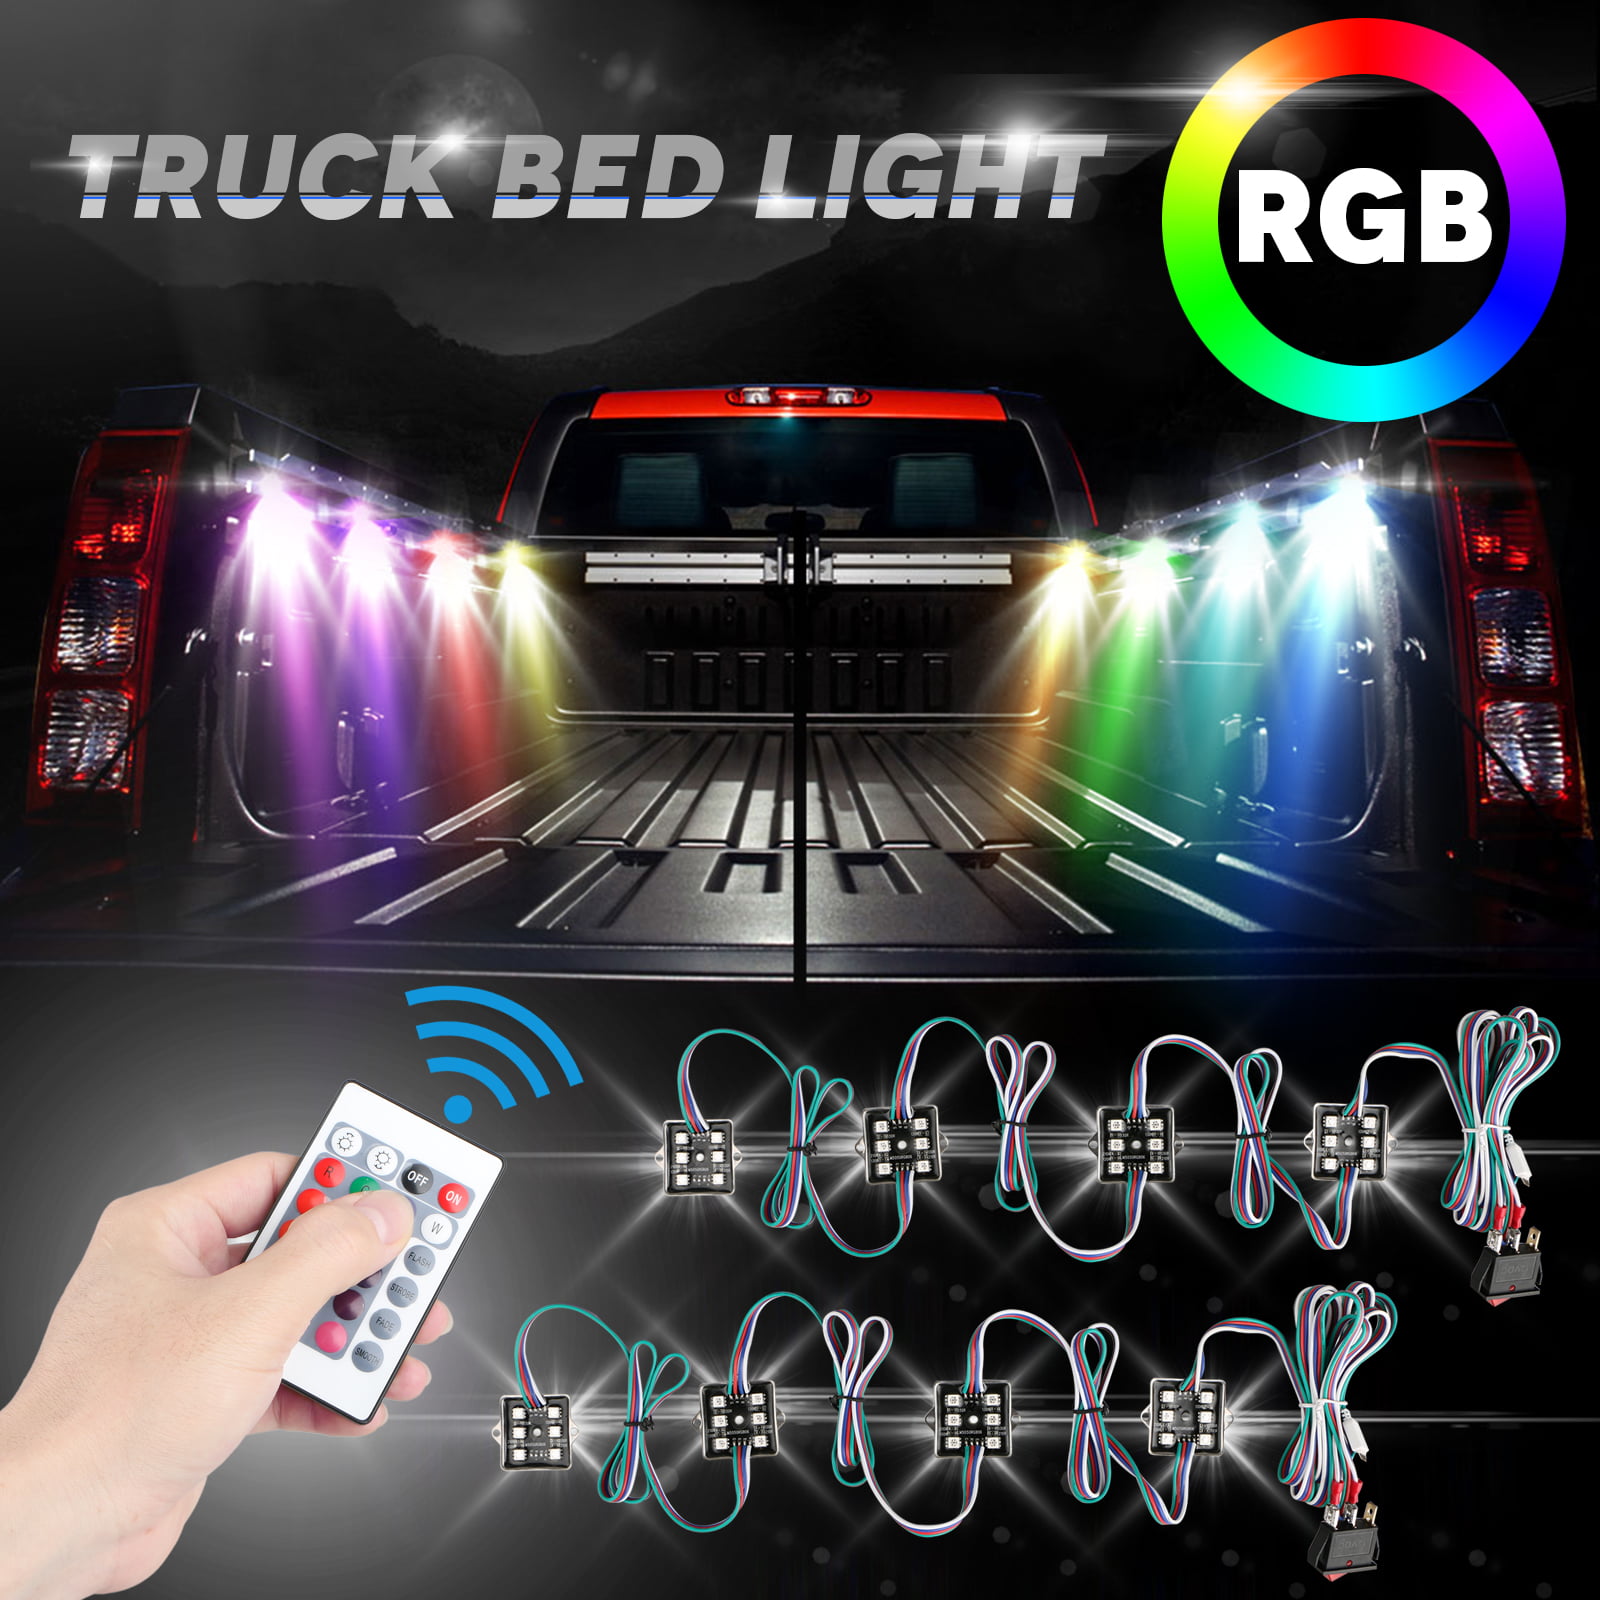 Leds Rgb Truck Bed Cargo Lights, Brightest Led Lights For Truck